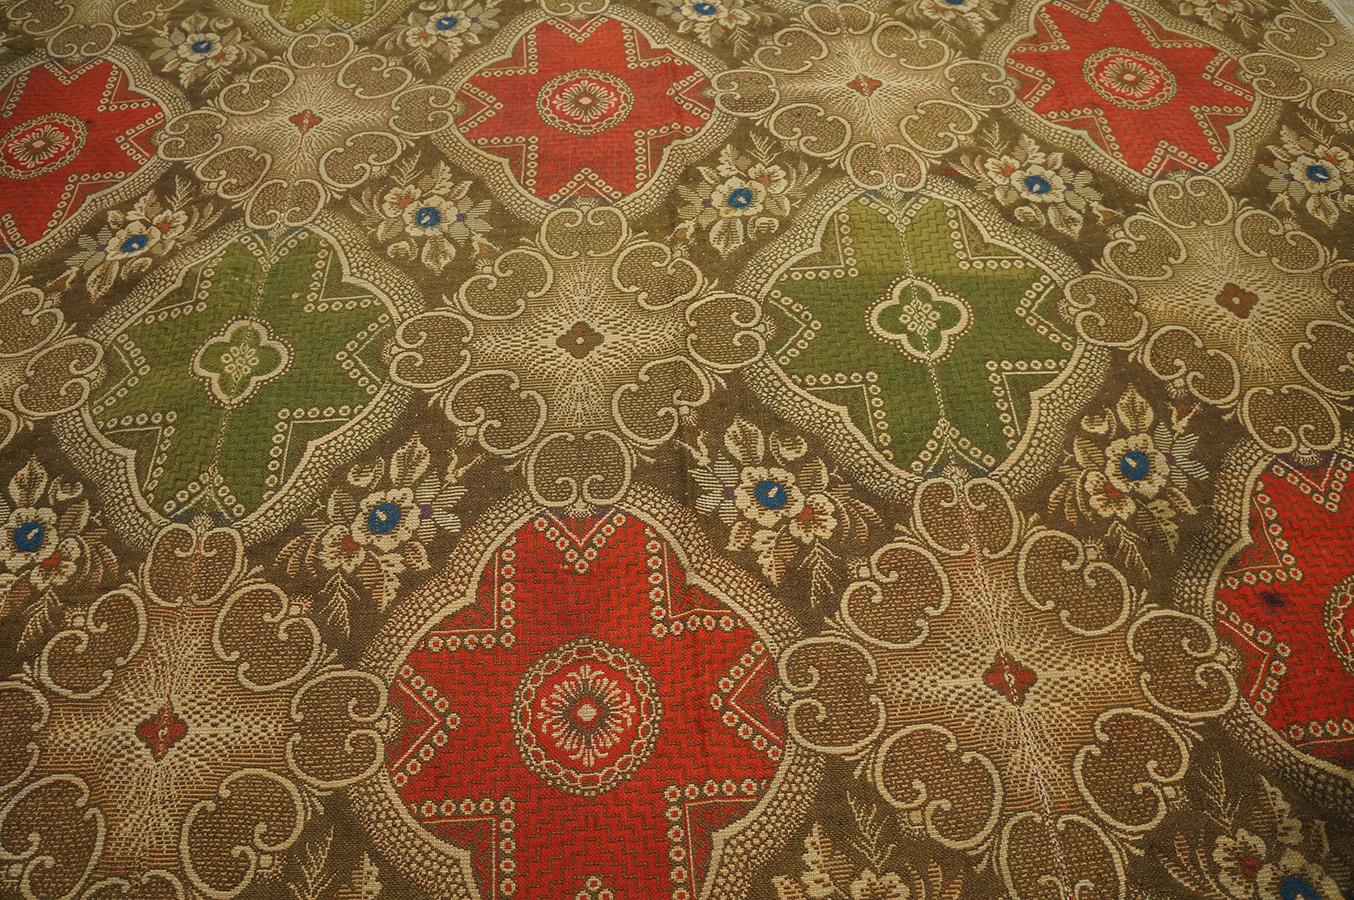 Mid 19th Century American Ingrain Carpet ( 8' 2'' x 12' 9'' - 250 x 390 cm ) For Sale 3